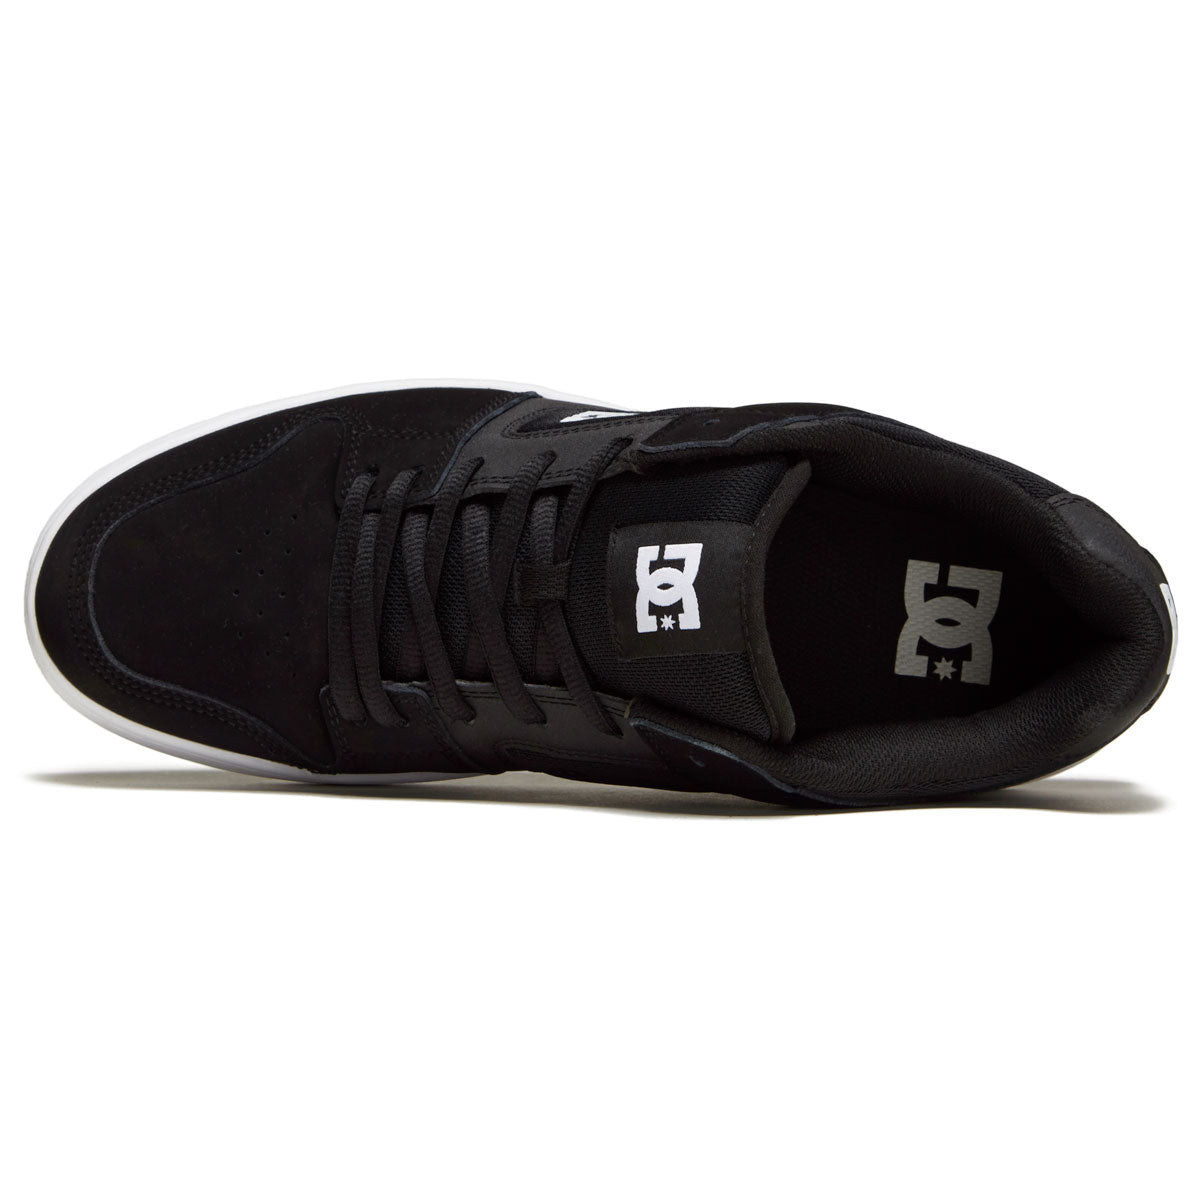 DC Manteca 4 Shoes - Black/White image 3